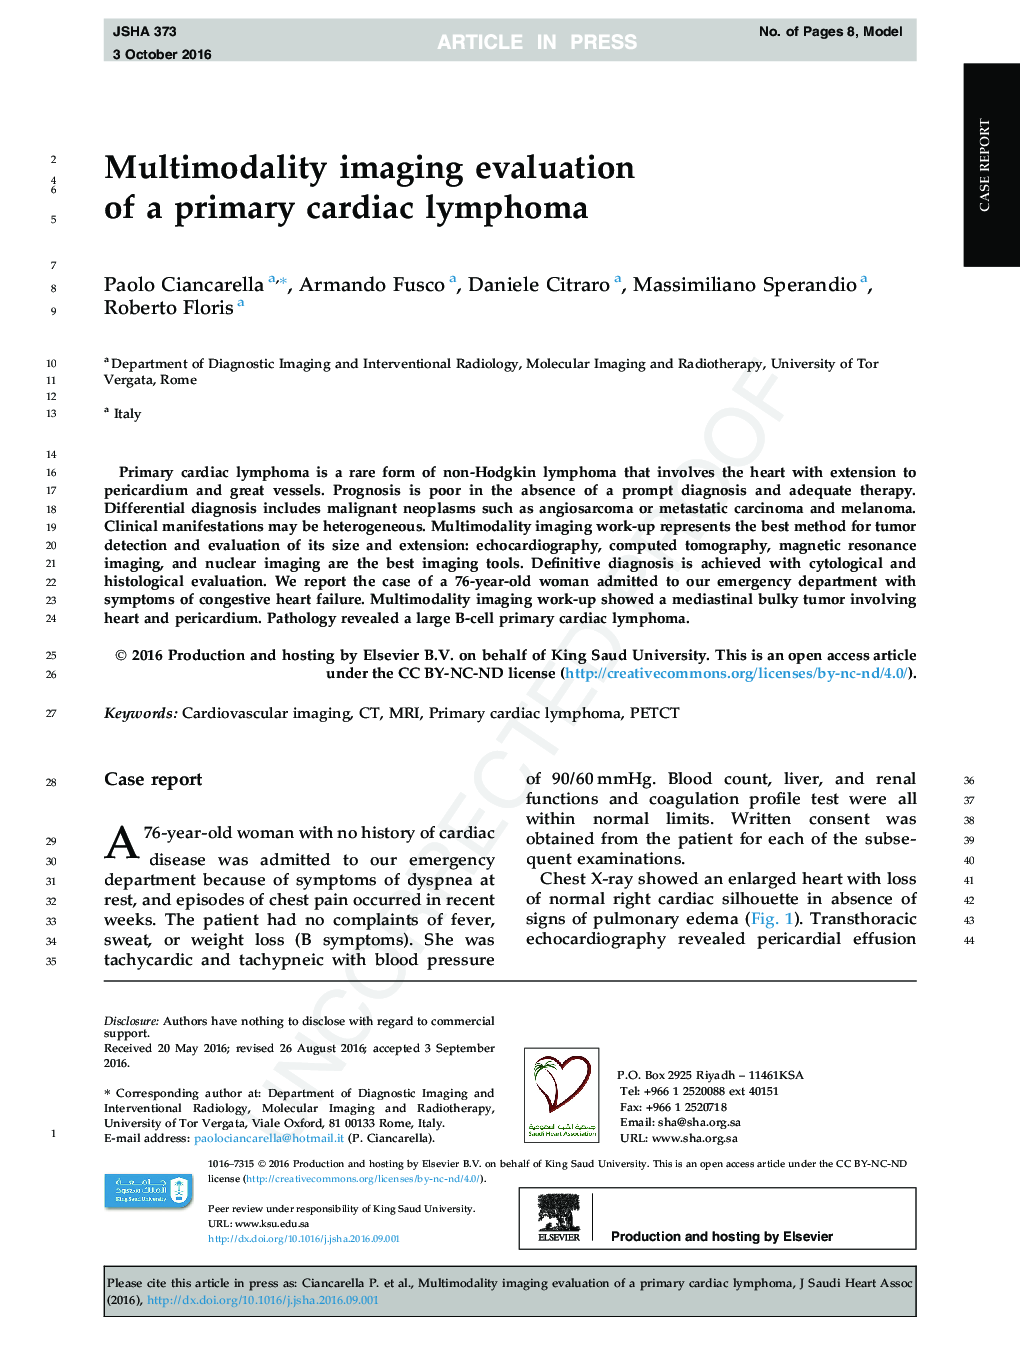 Multimodality imaging evaluation of a primary cardiac lymphoma